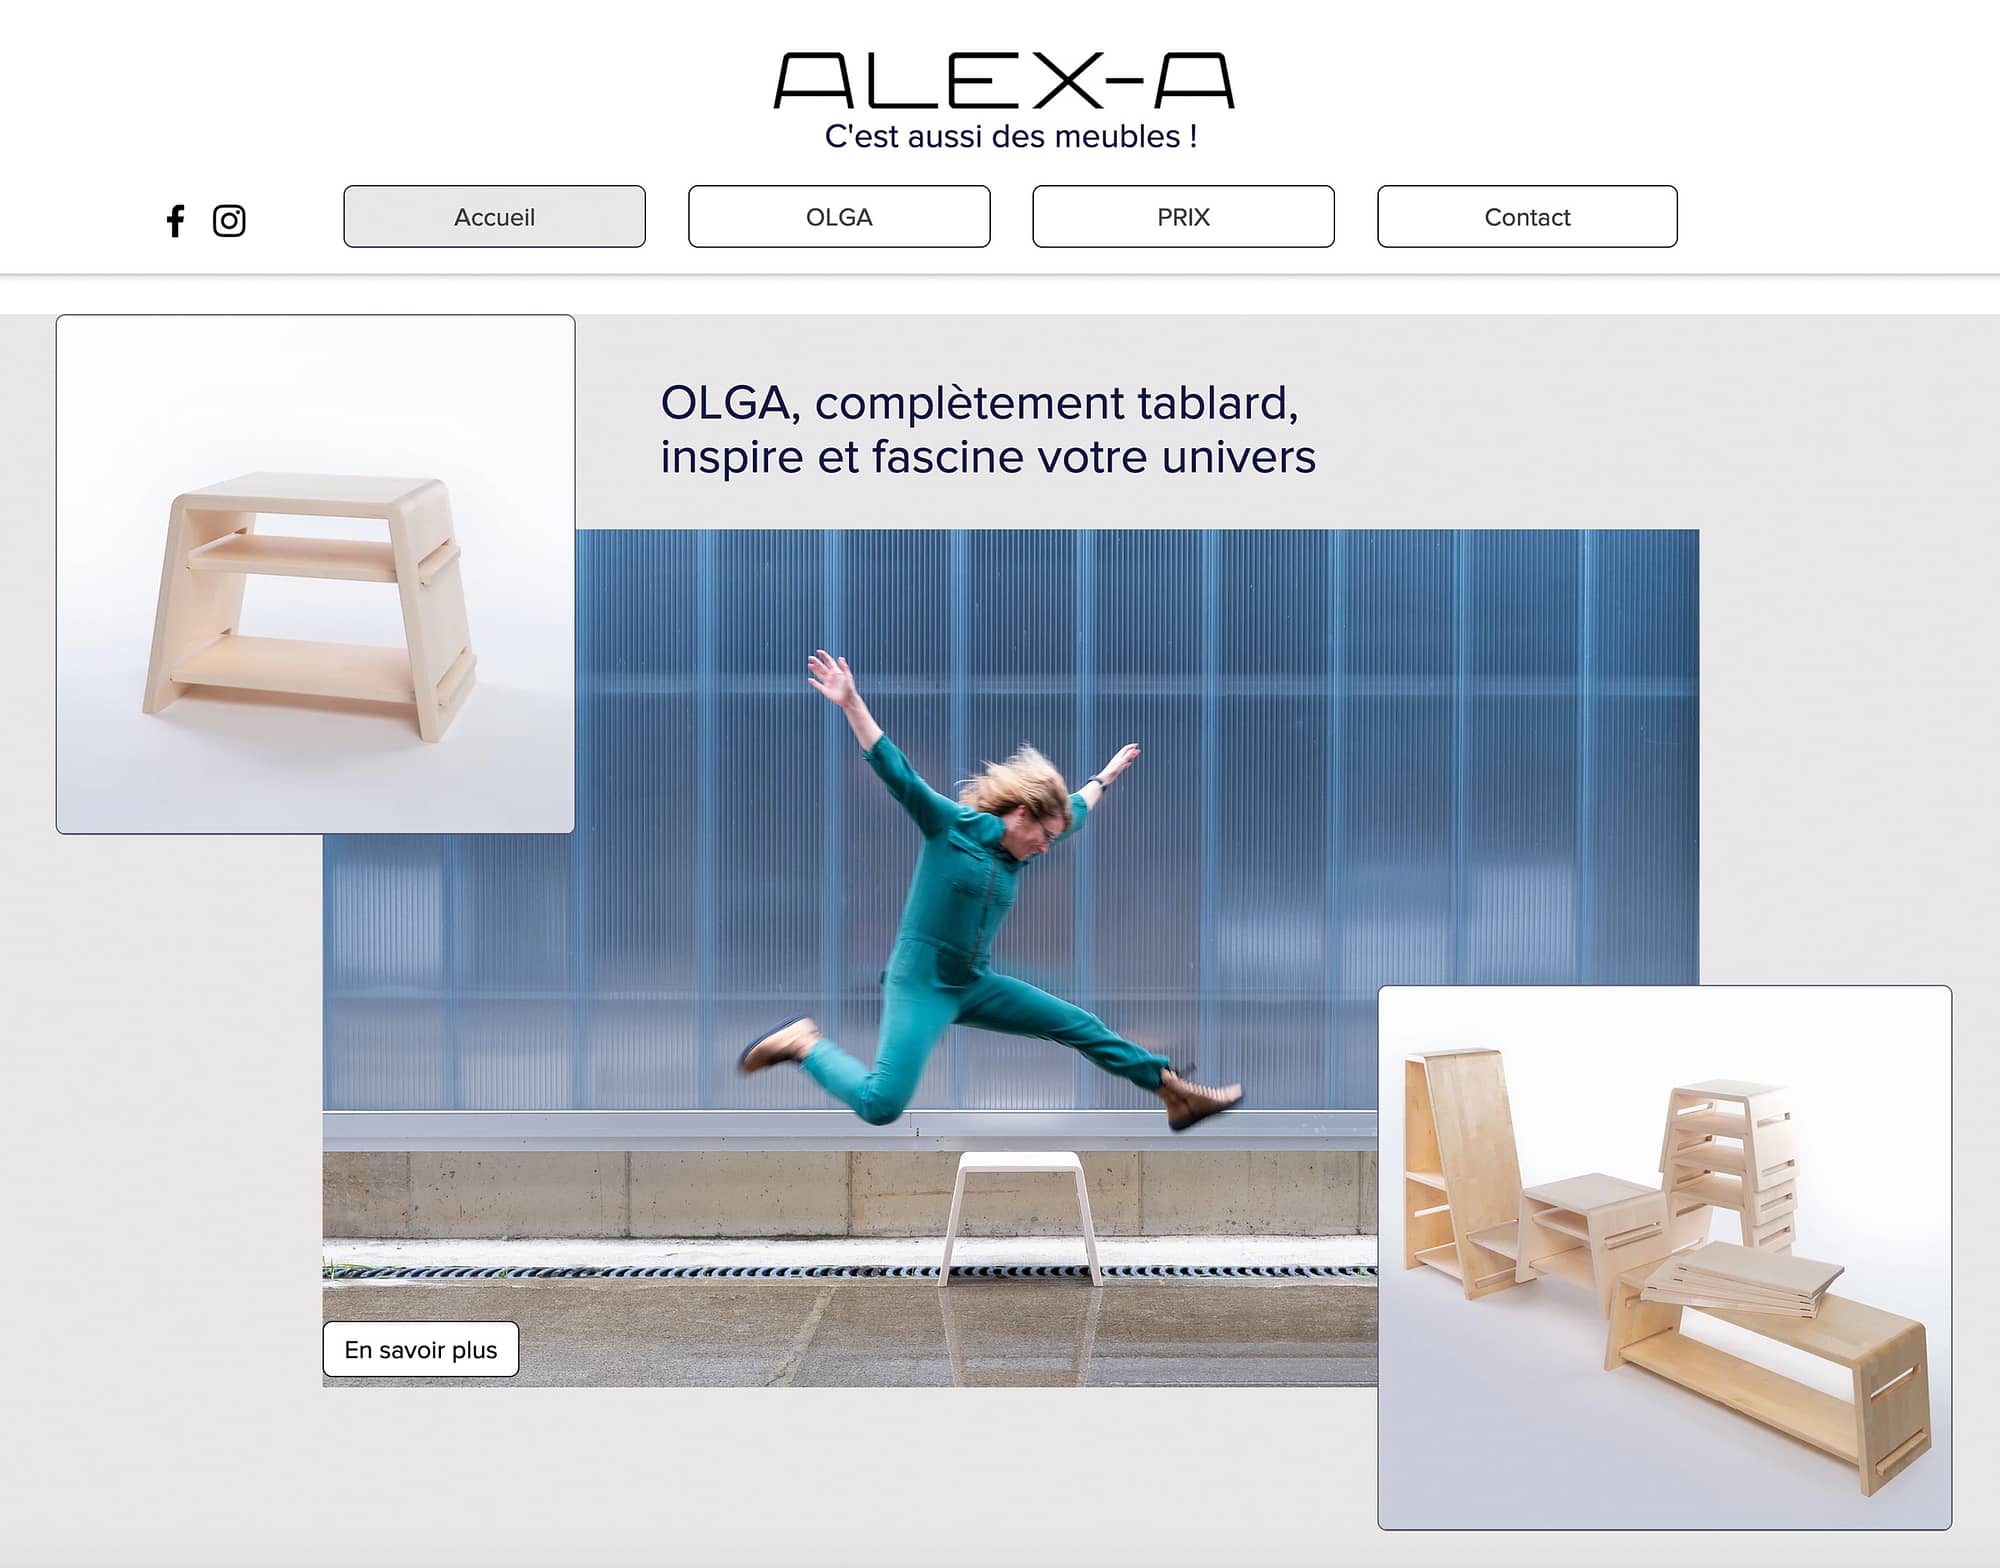 Alexa Krattinger - Alex-A - Olga by STEMUTZ, bluefactory, 05.10.2020